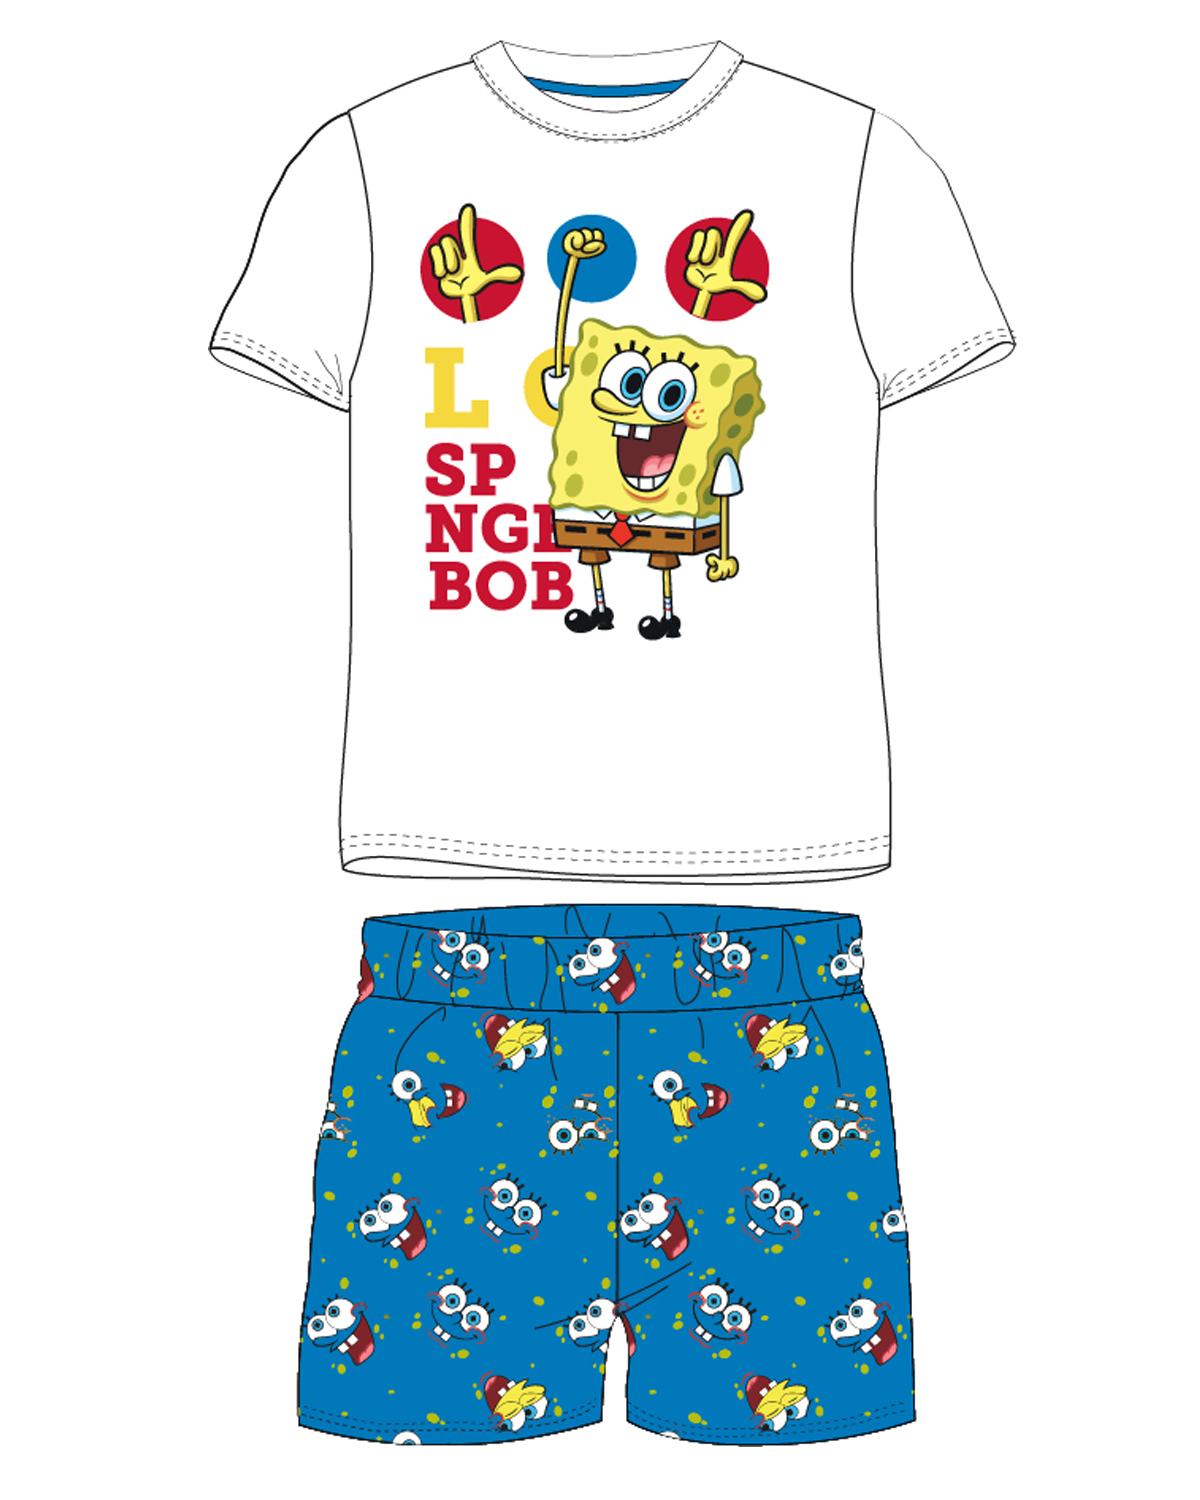 SpongeBob v kalhotách - licence Chlapecké pyžamo - SpongeBob v kalhotách 5204203W, bílá / modrá Barva: Mix barev, Velikost: 110